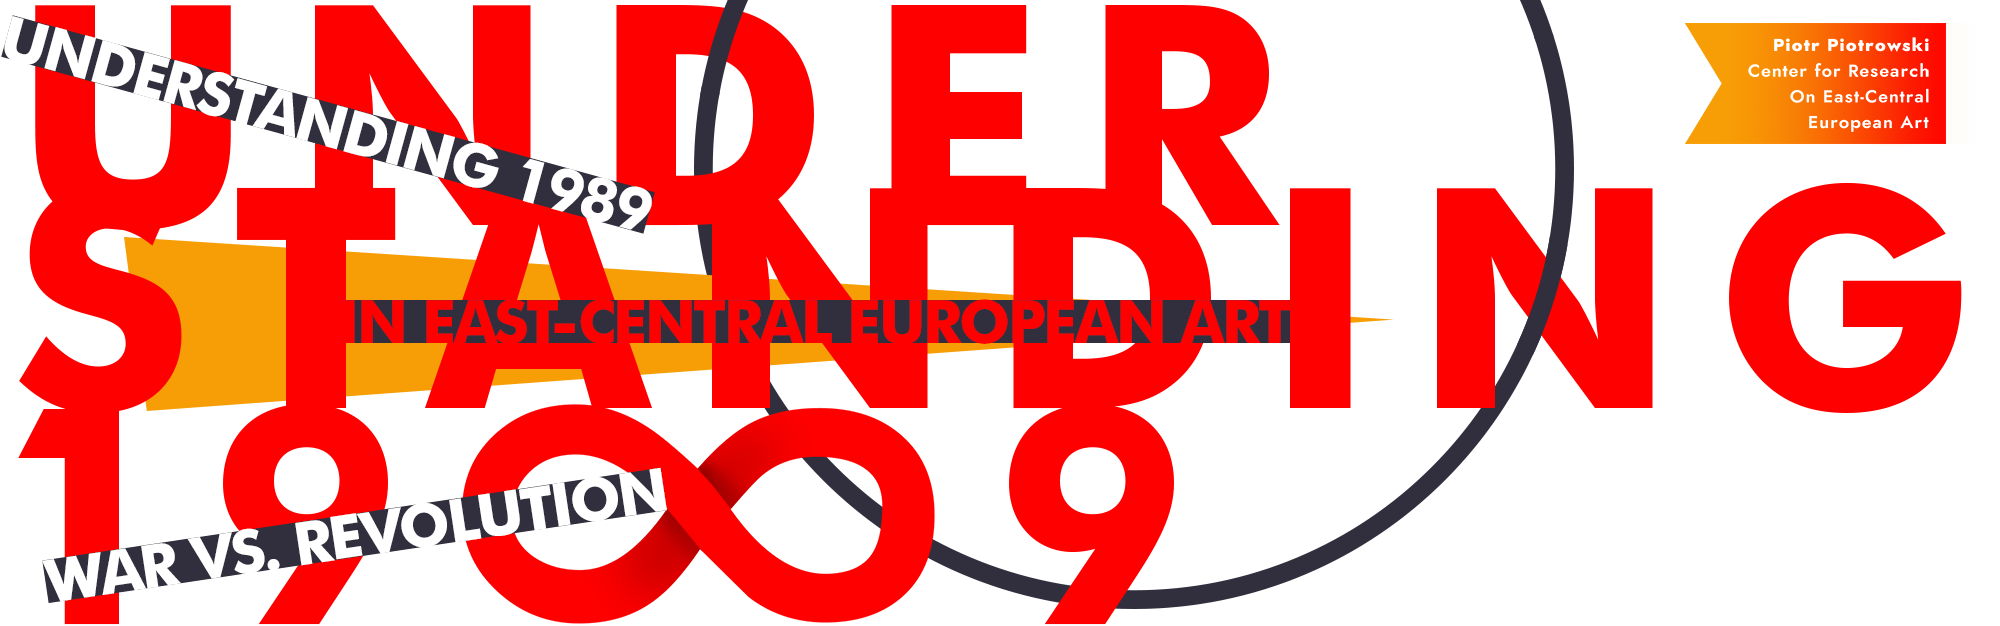 Understanding 1989 in East-Central European Art. War vs. Revolution  — 4 seminars in 2023 in East-Central Europe